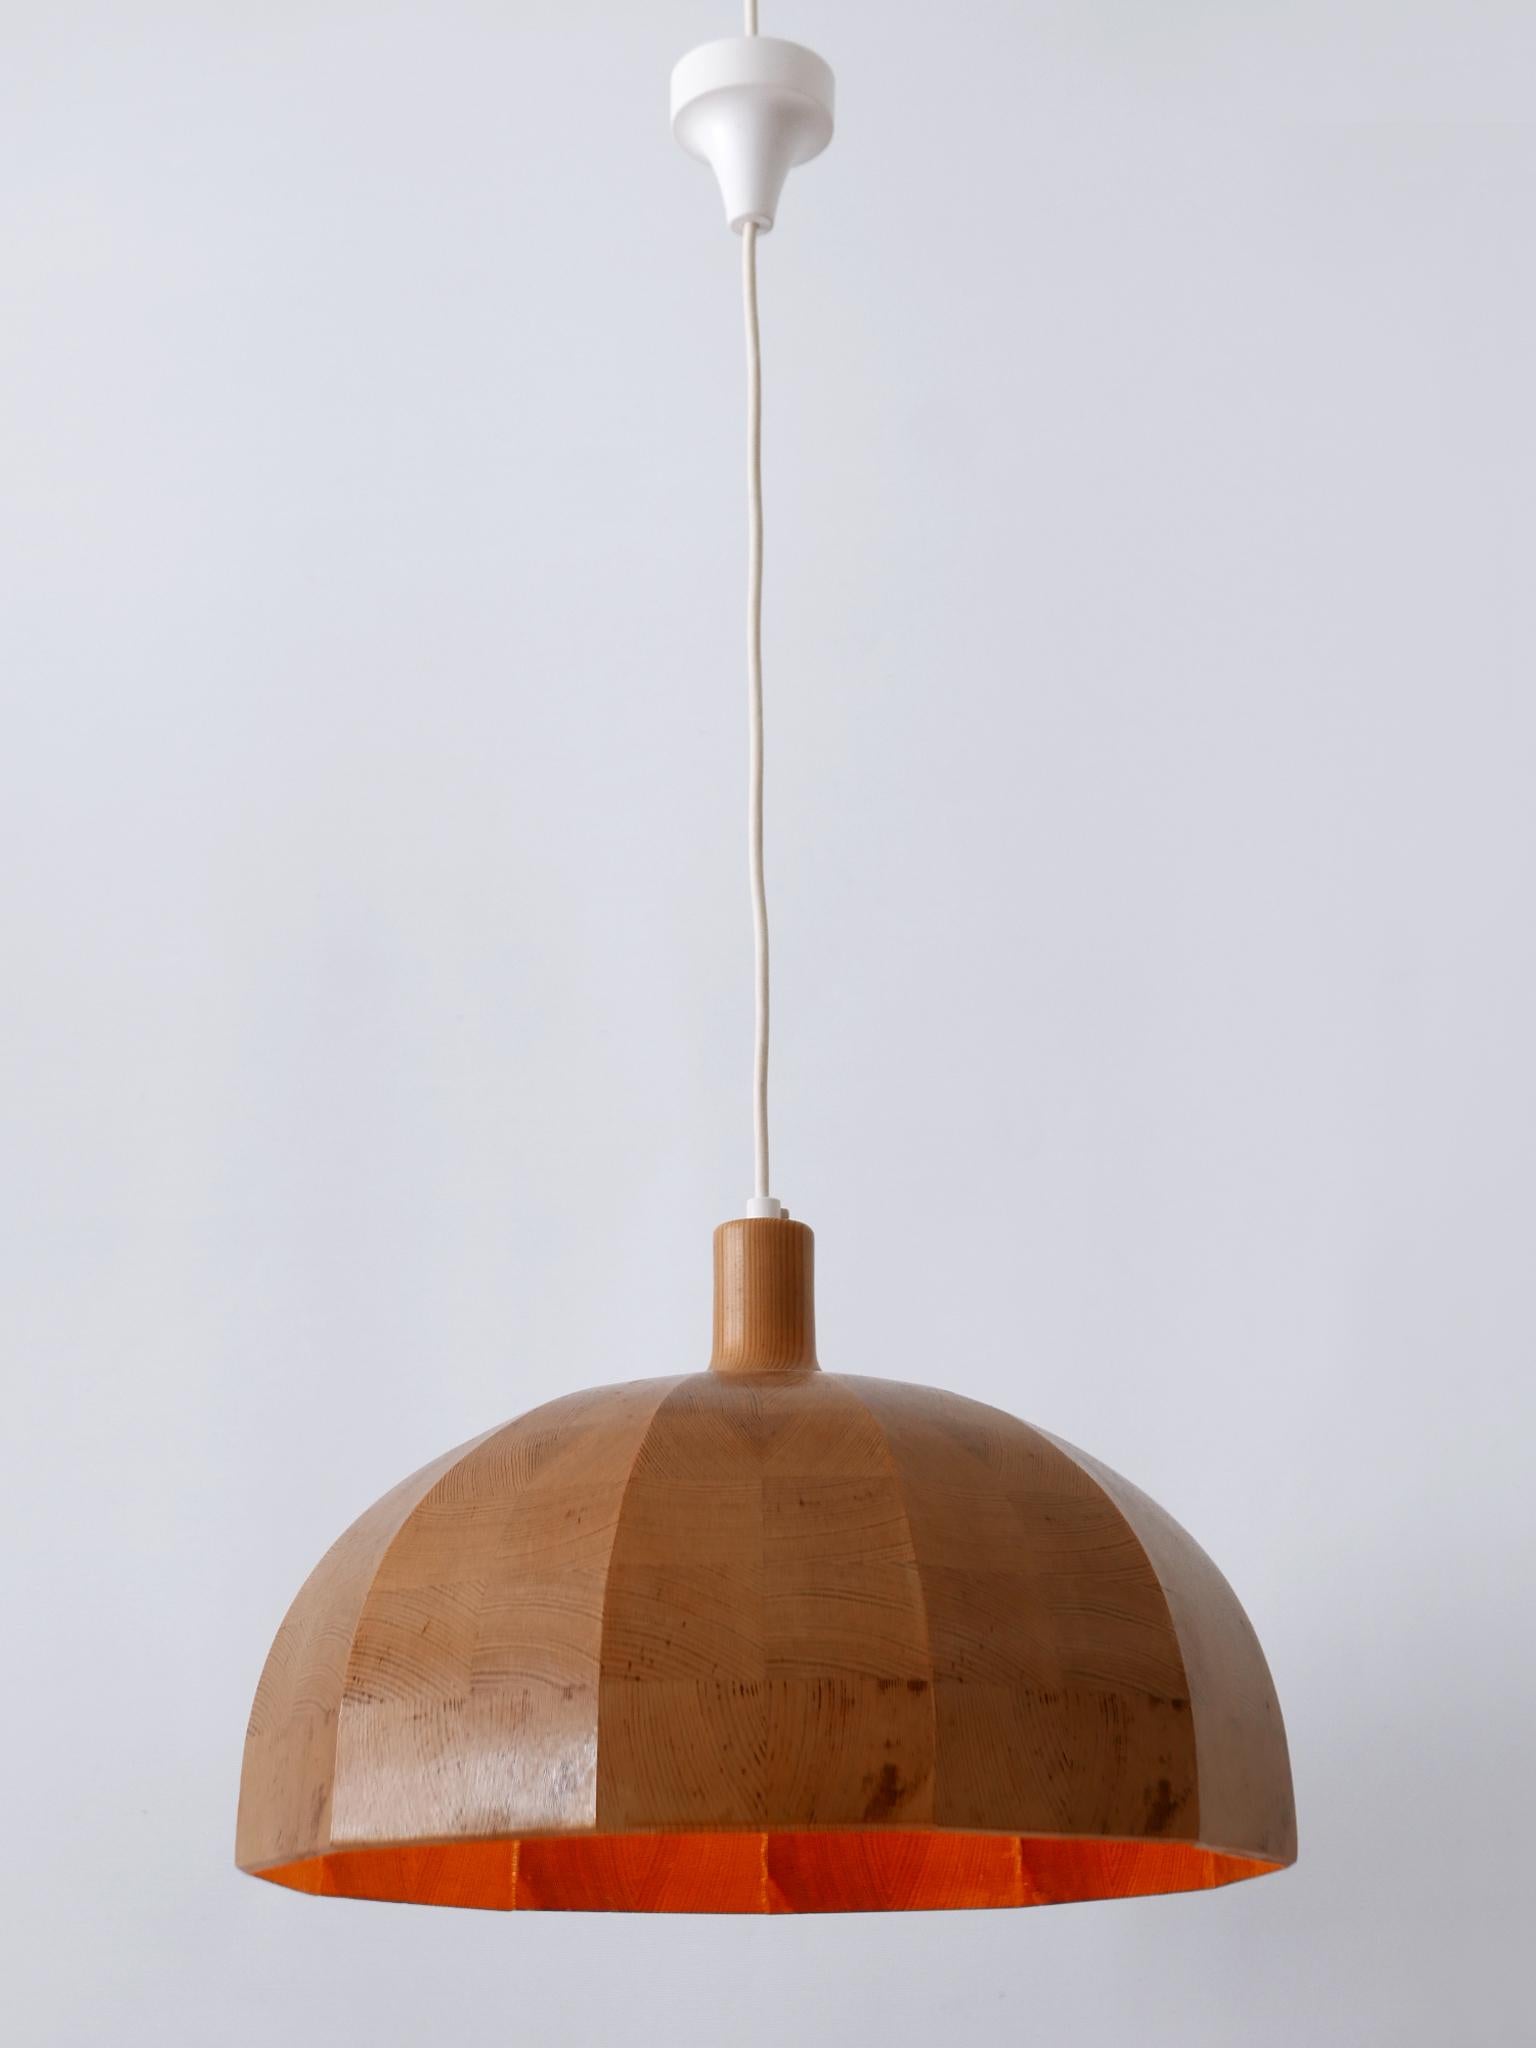 Rare Mid-Century Modern Pine Wood Pendant Lamp or Hanging Light Sweden, 1960s For Sale 3